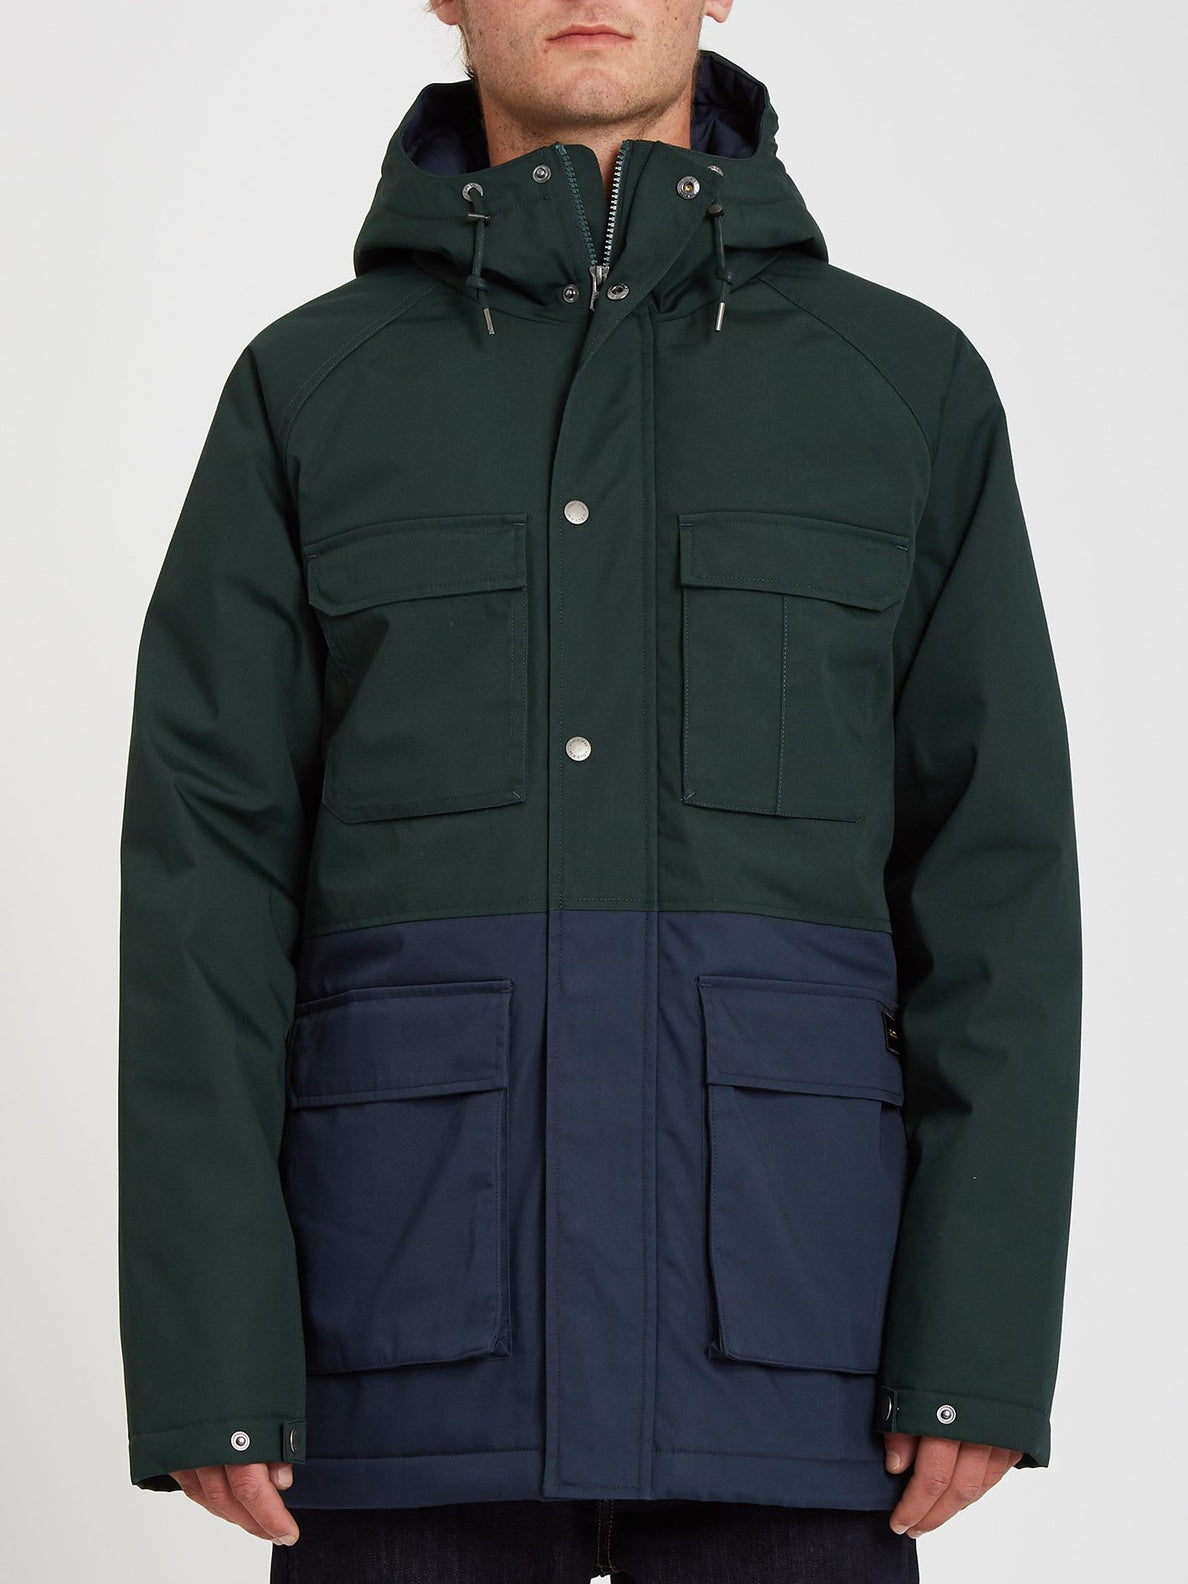 Renton Winter 5K Jacket - STONE CULTURE BLUE (A1732014_SCB) [F]